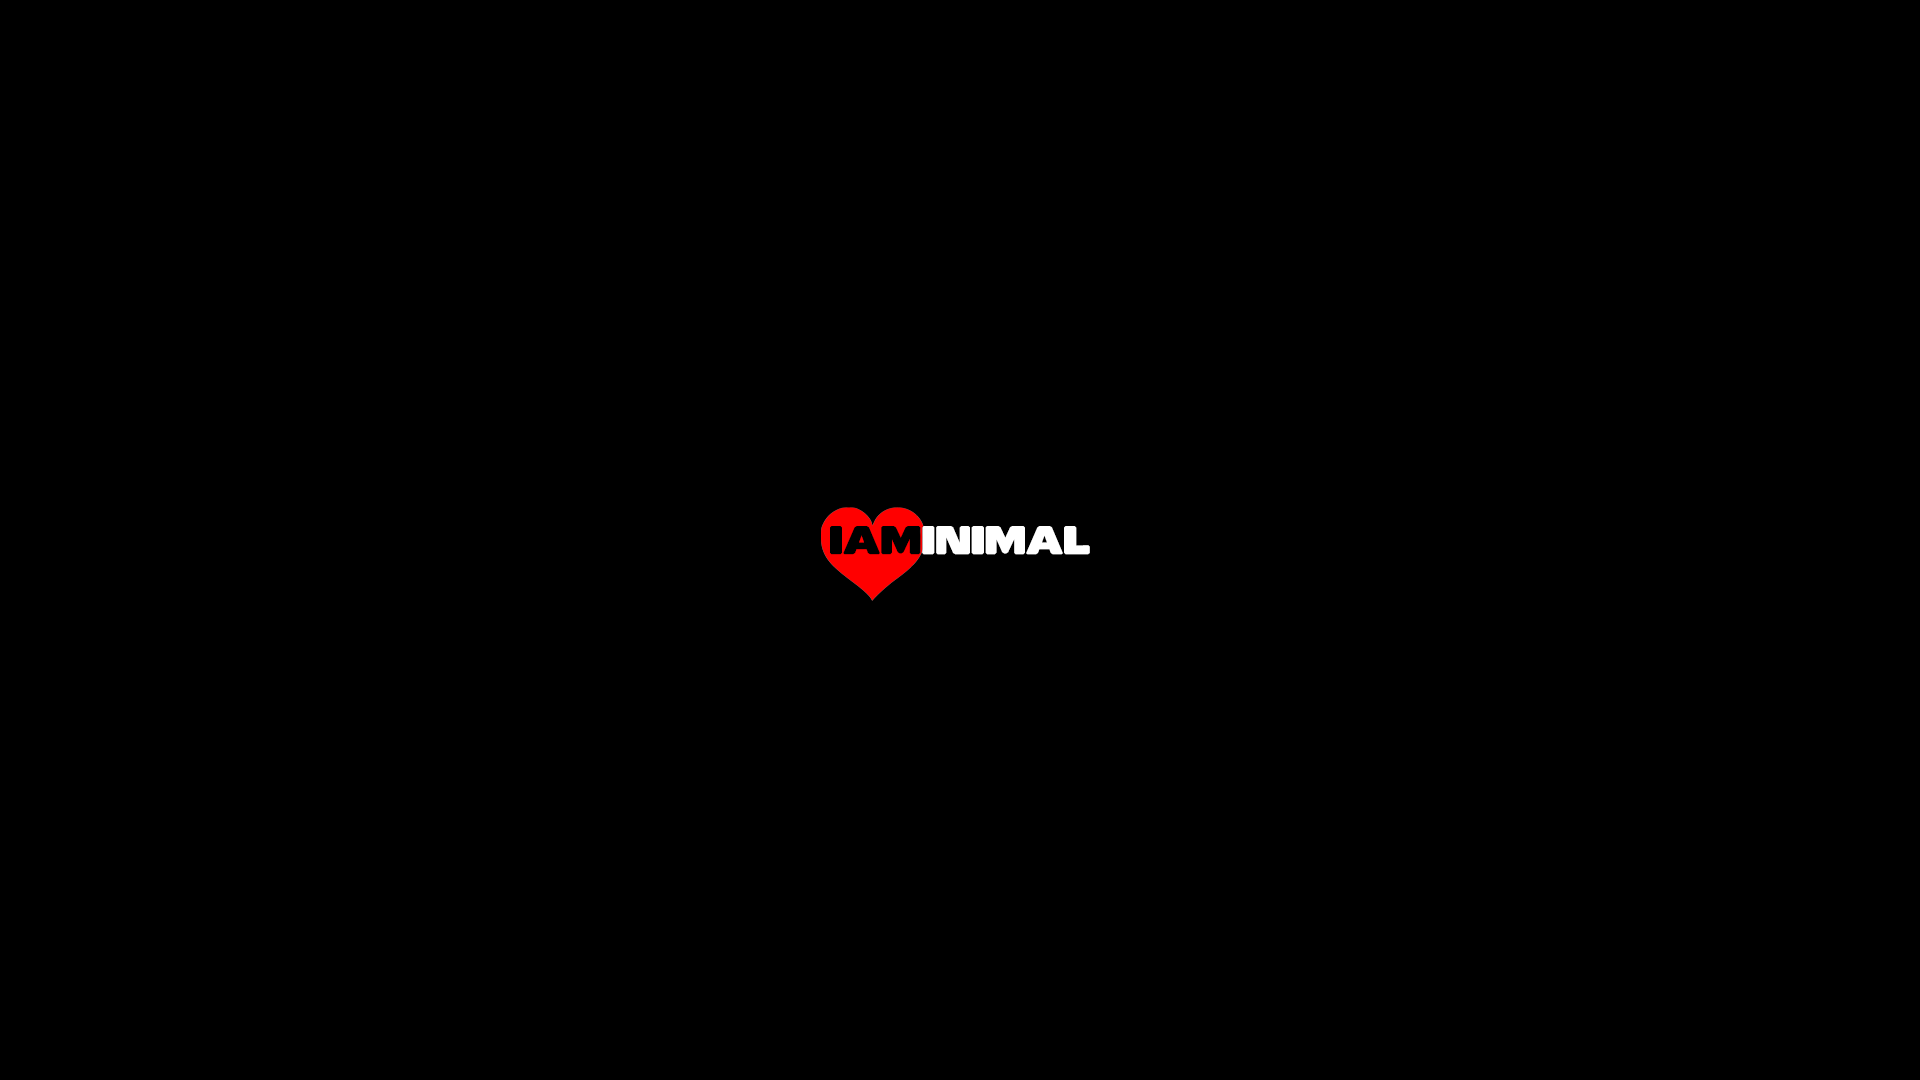 General 1920x1080 minimalism heart (design) black background dark digital art simple background